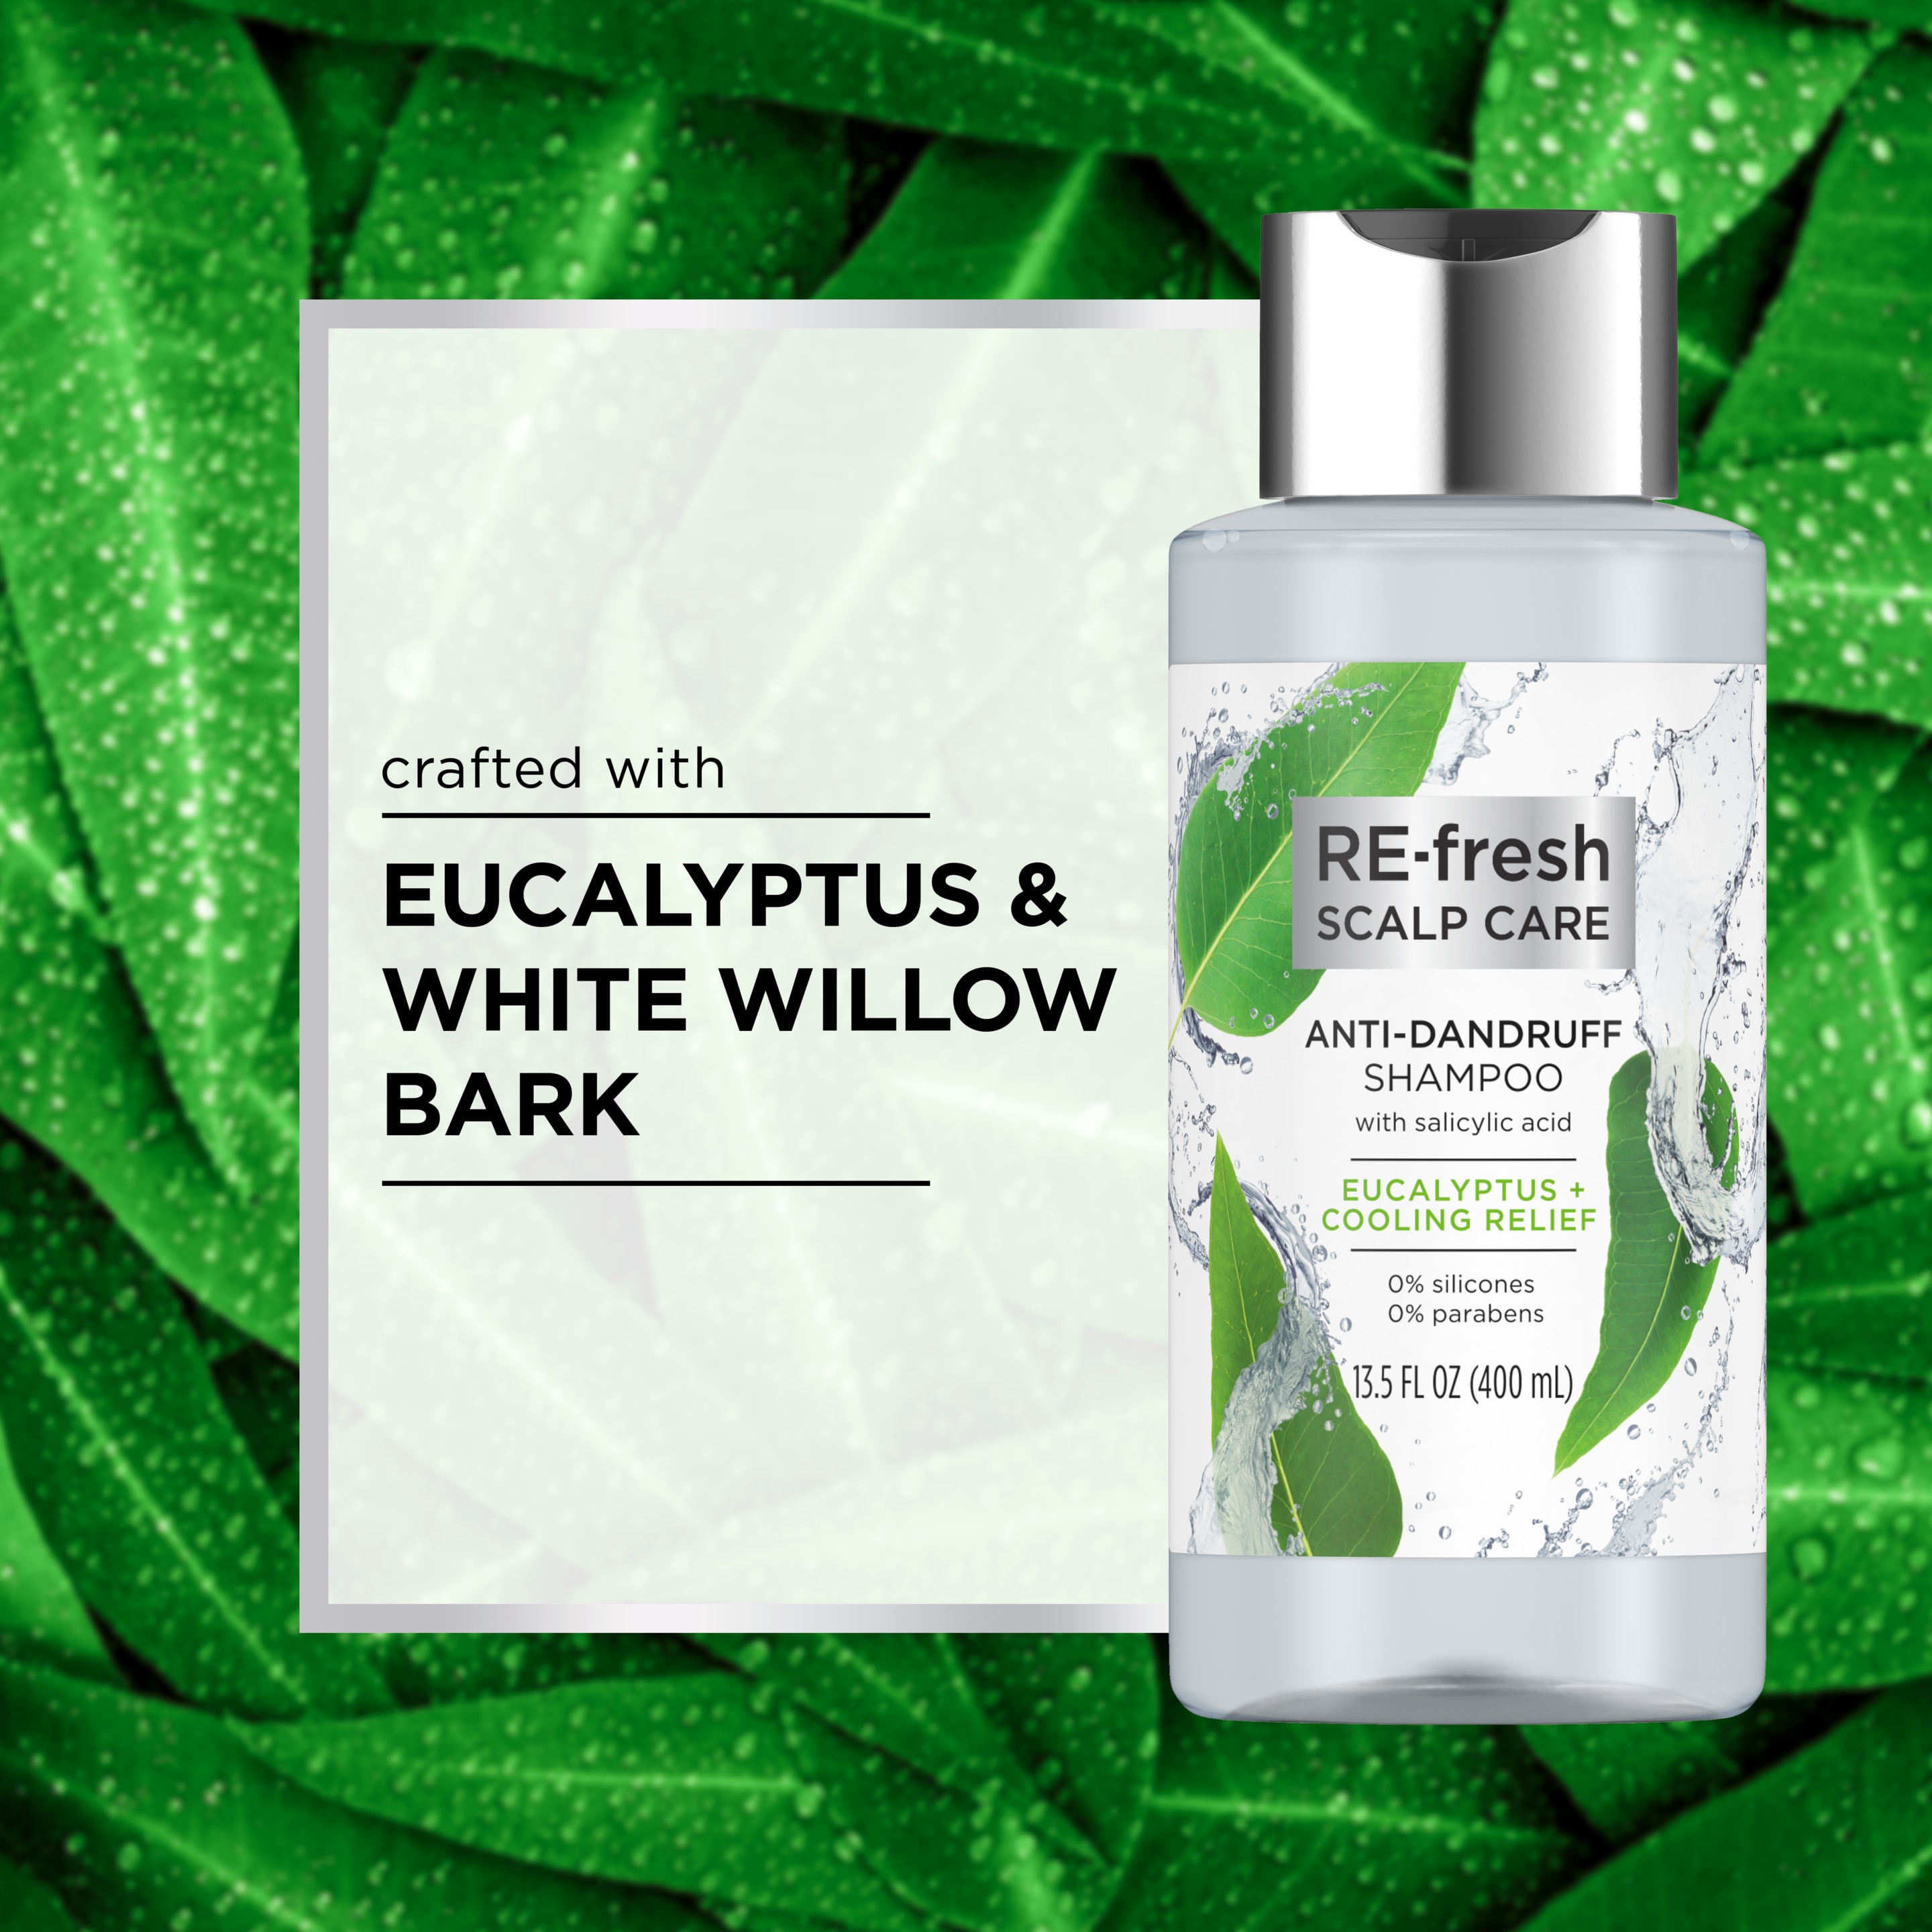 Ingredient Asset RE-fresh Eucalyptus + Cooling Relief Shampoo